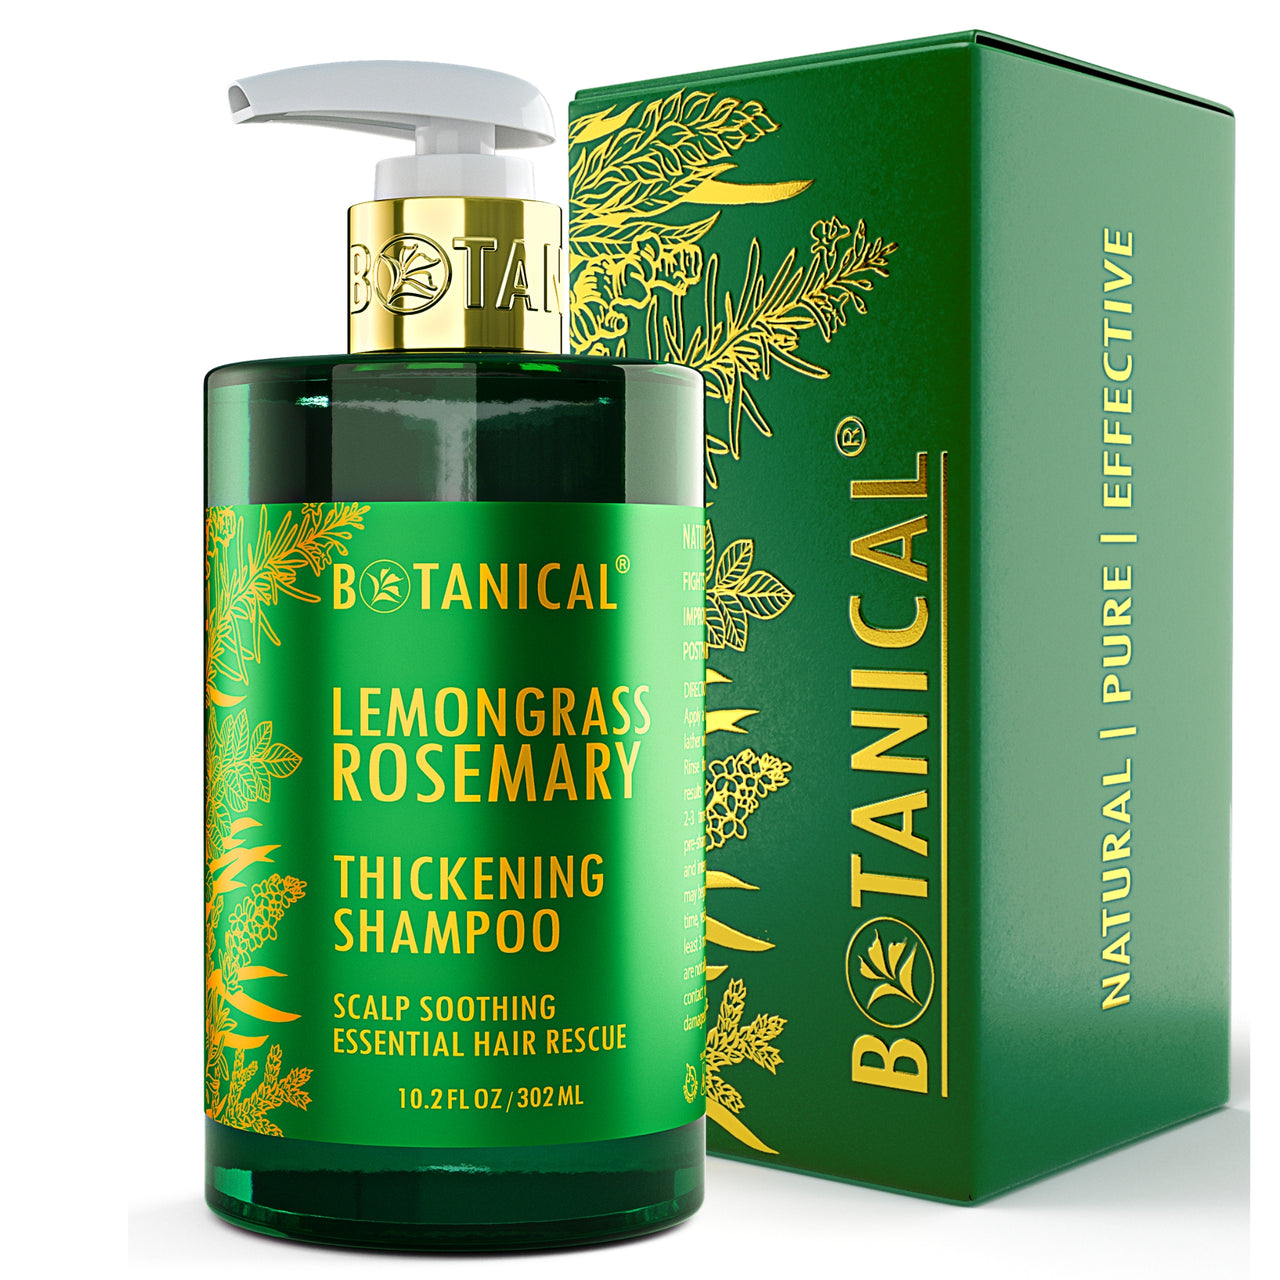 Lemongrass & Rosemary Shampoo For Thinning Hair - Scalp Soothing - 10.2 Fl Oz